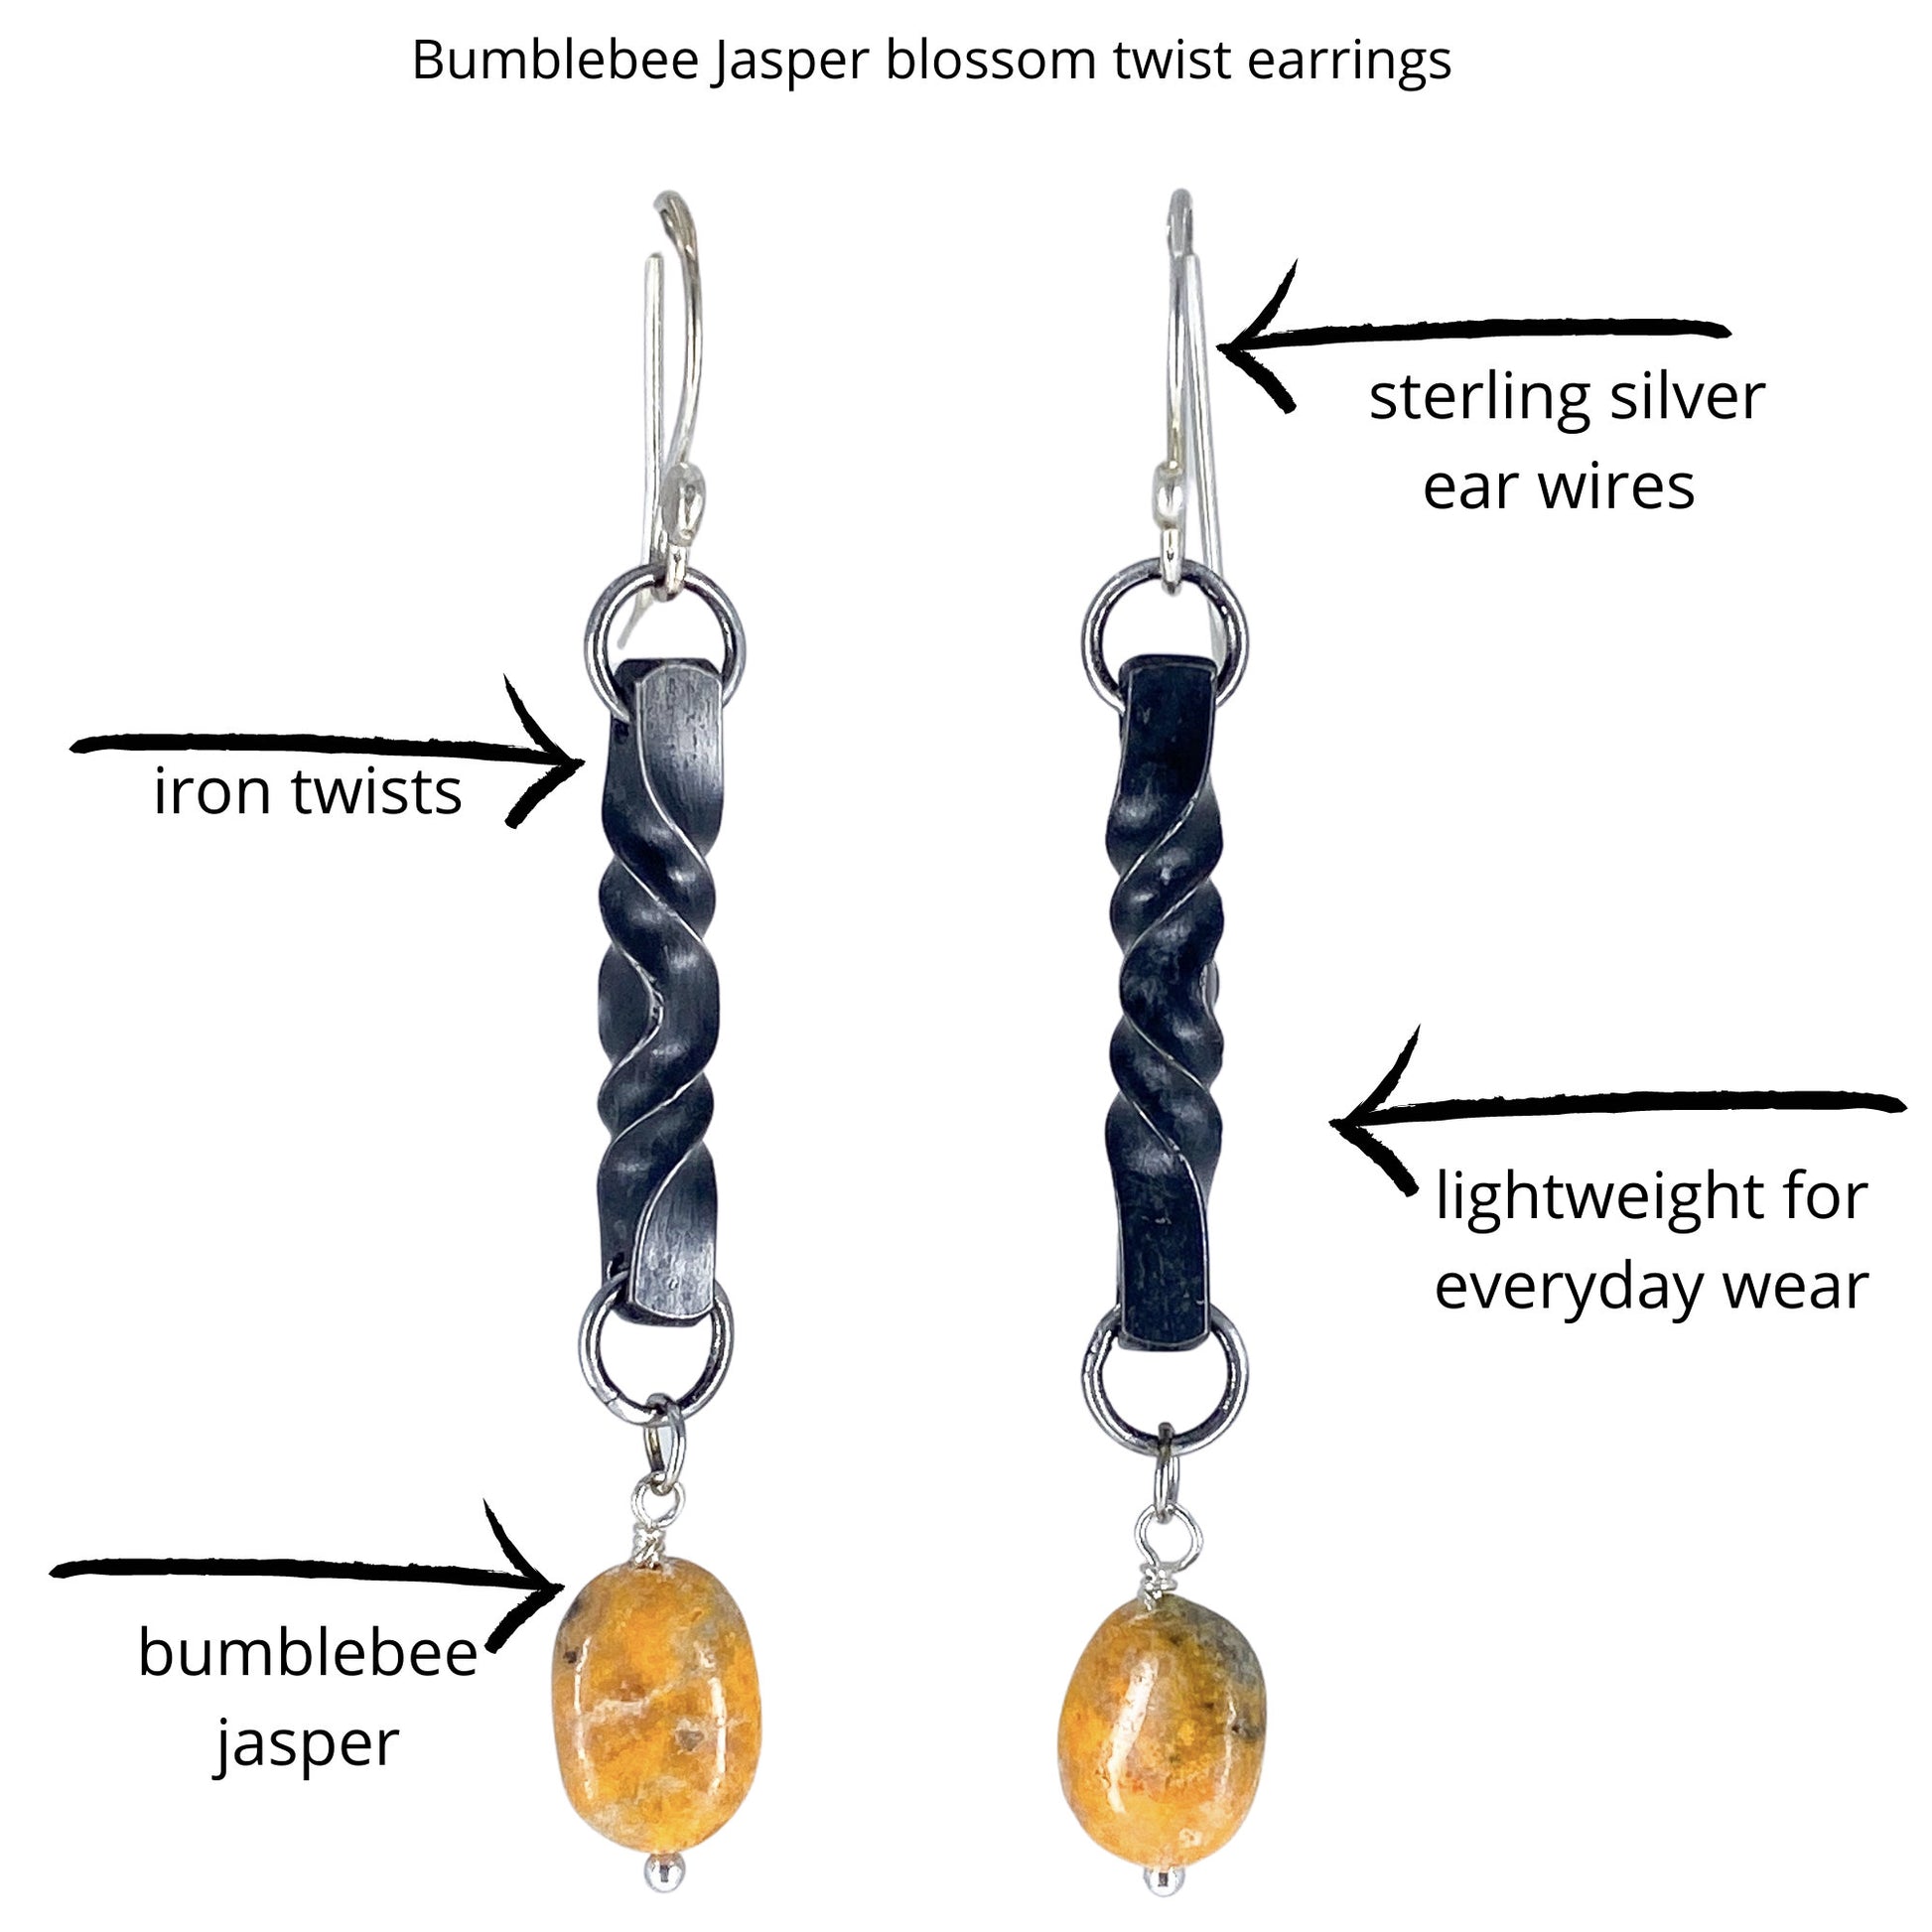 iron and bumblebee jasper earrings, 6th anniversary gift for wife, iron twist earrings and jasper necklace, iron anniversary gift for her